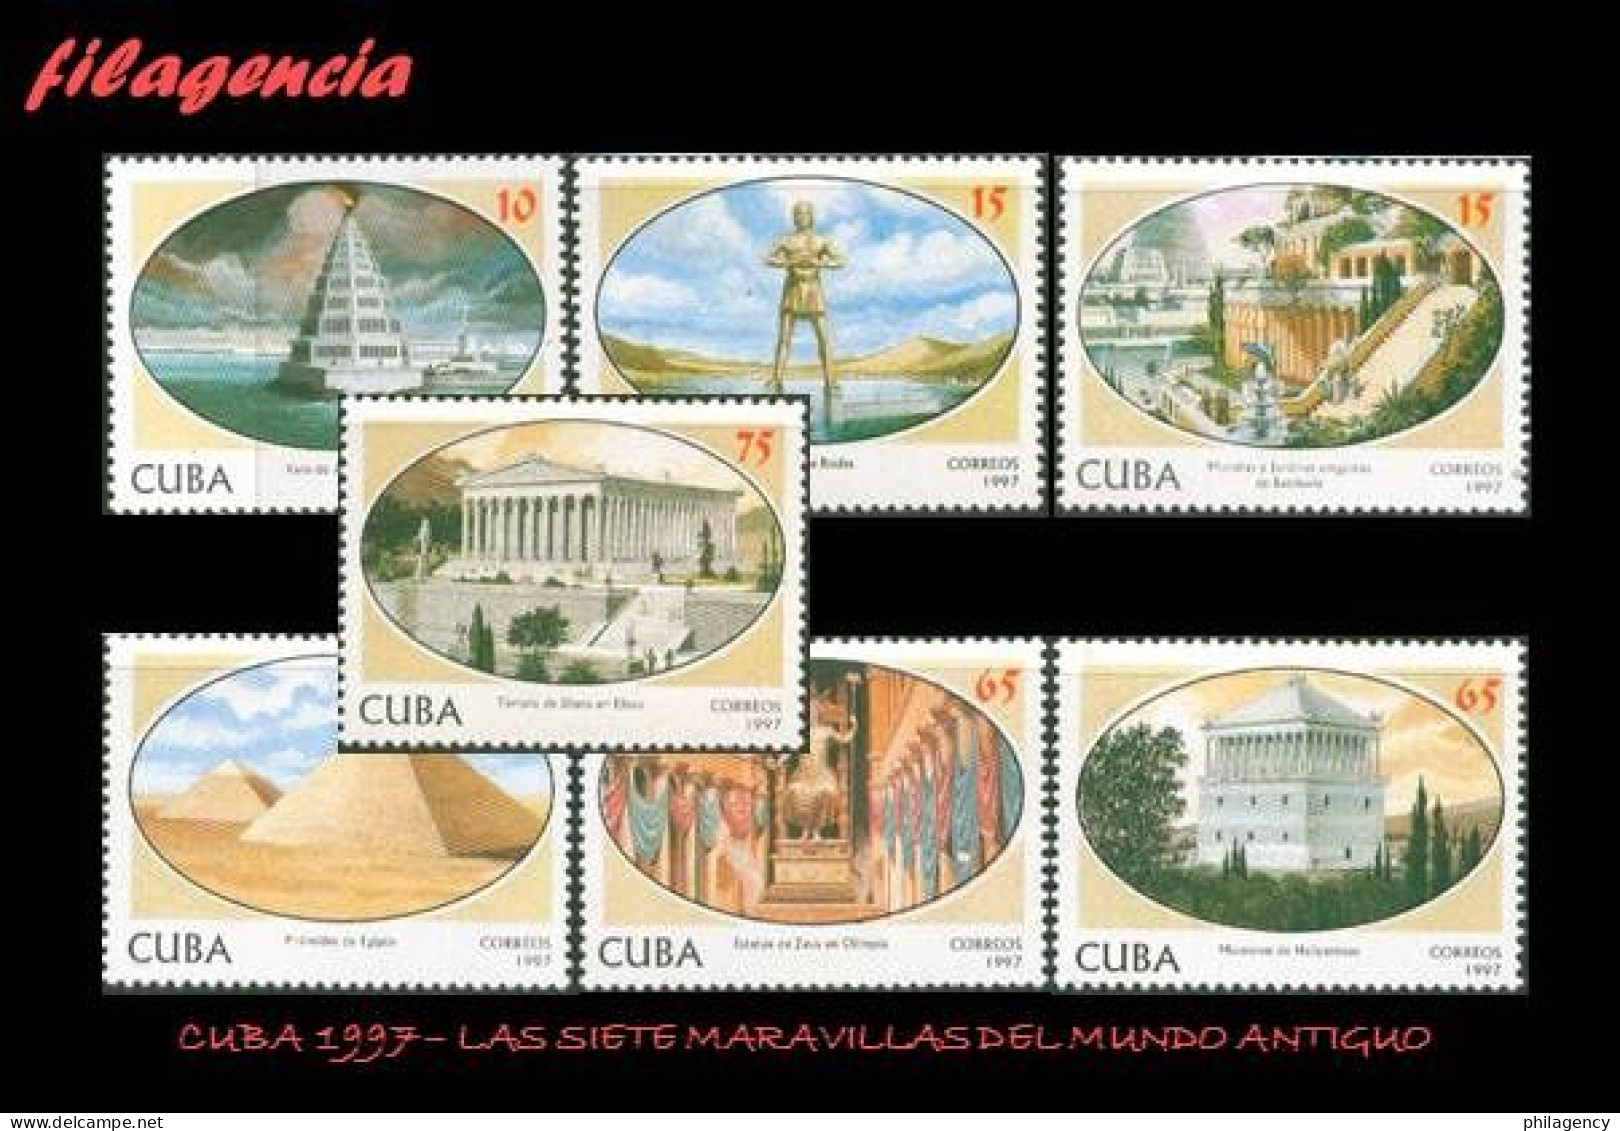 CUBA MINT. 1997-15 LAS SIETE MARAVILLAS DEL MUNDO ANTIGUO - Unused Stamps